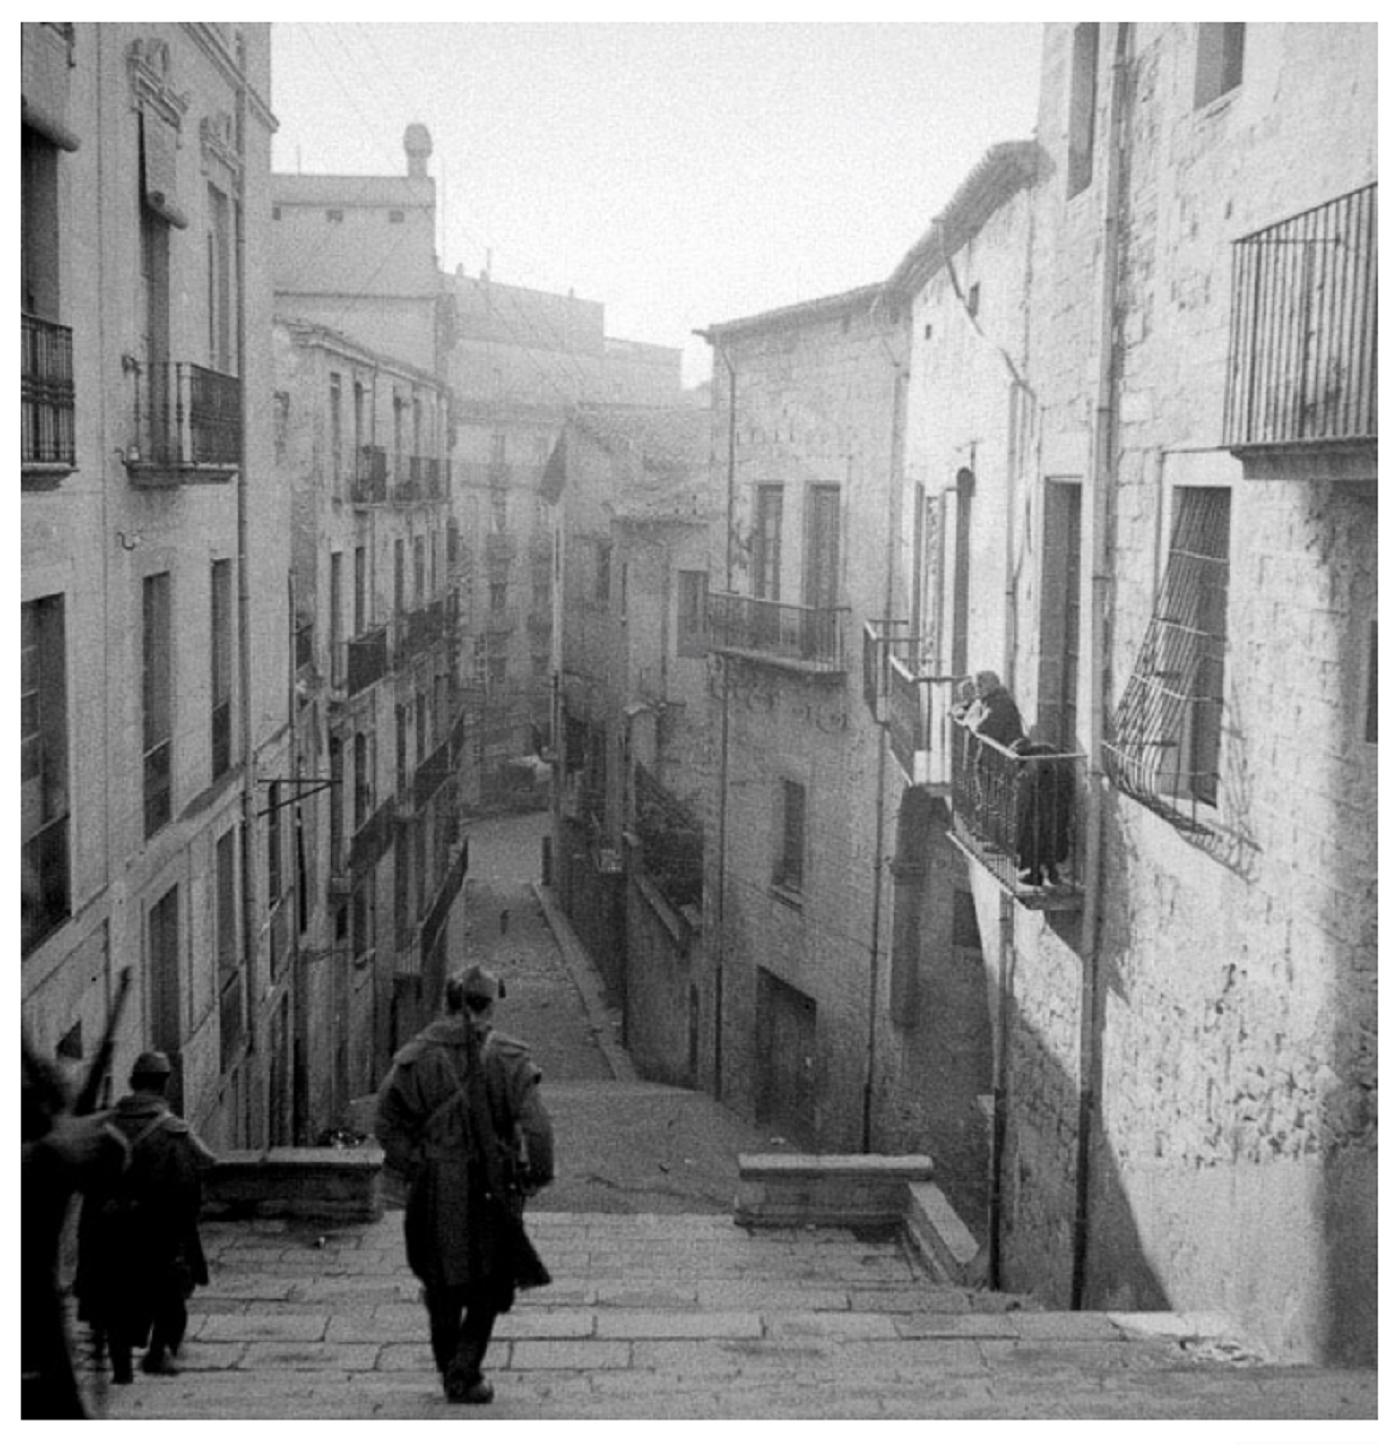 L'exèrcit franquista ocupa Girona